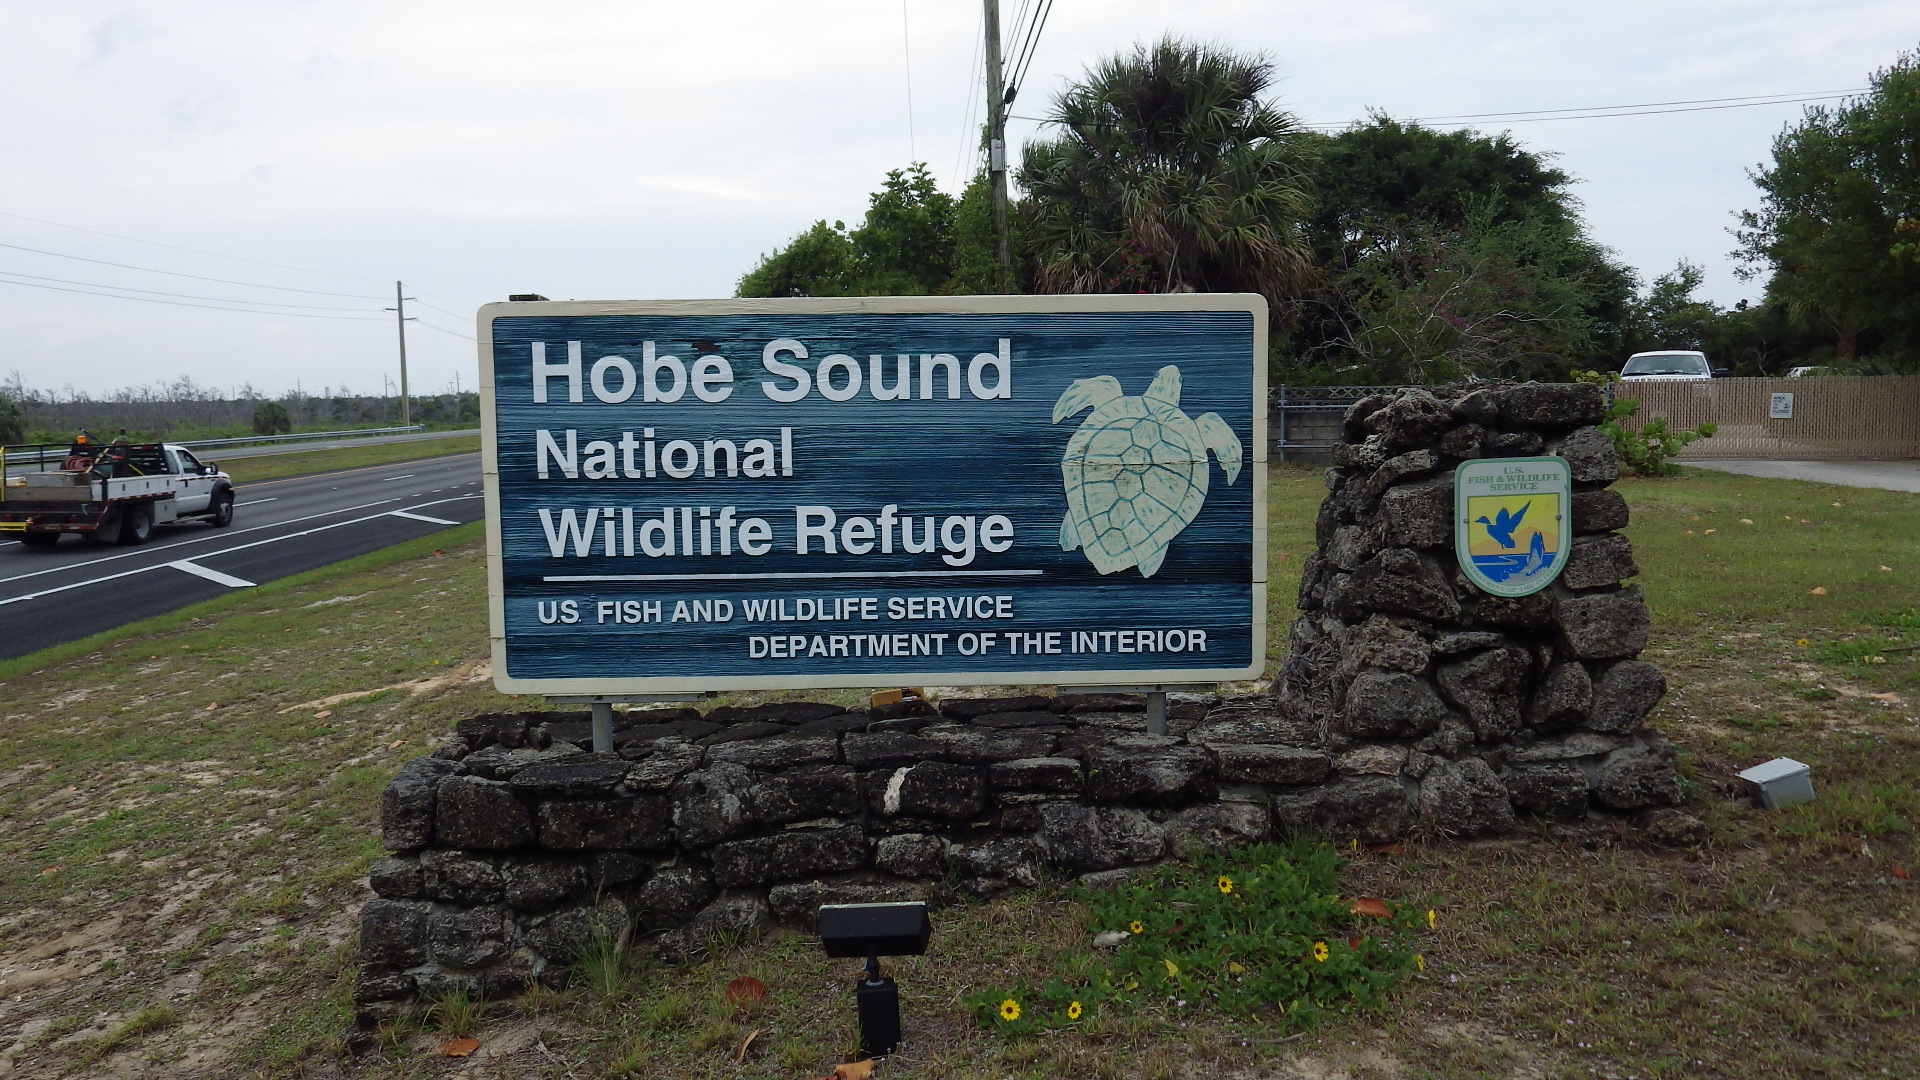 Hobe Sound Nature Center at the National Wildlife Refuge Image